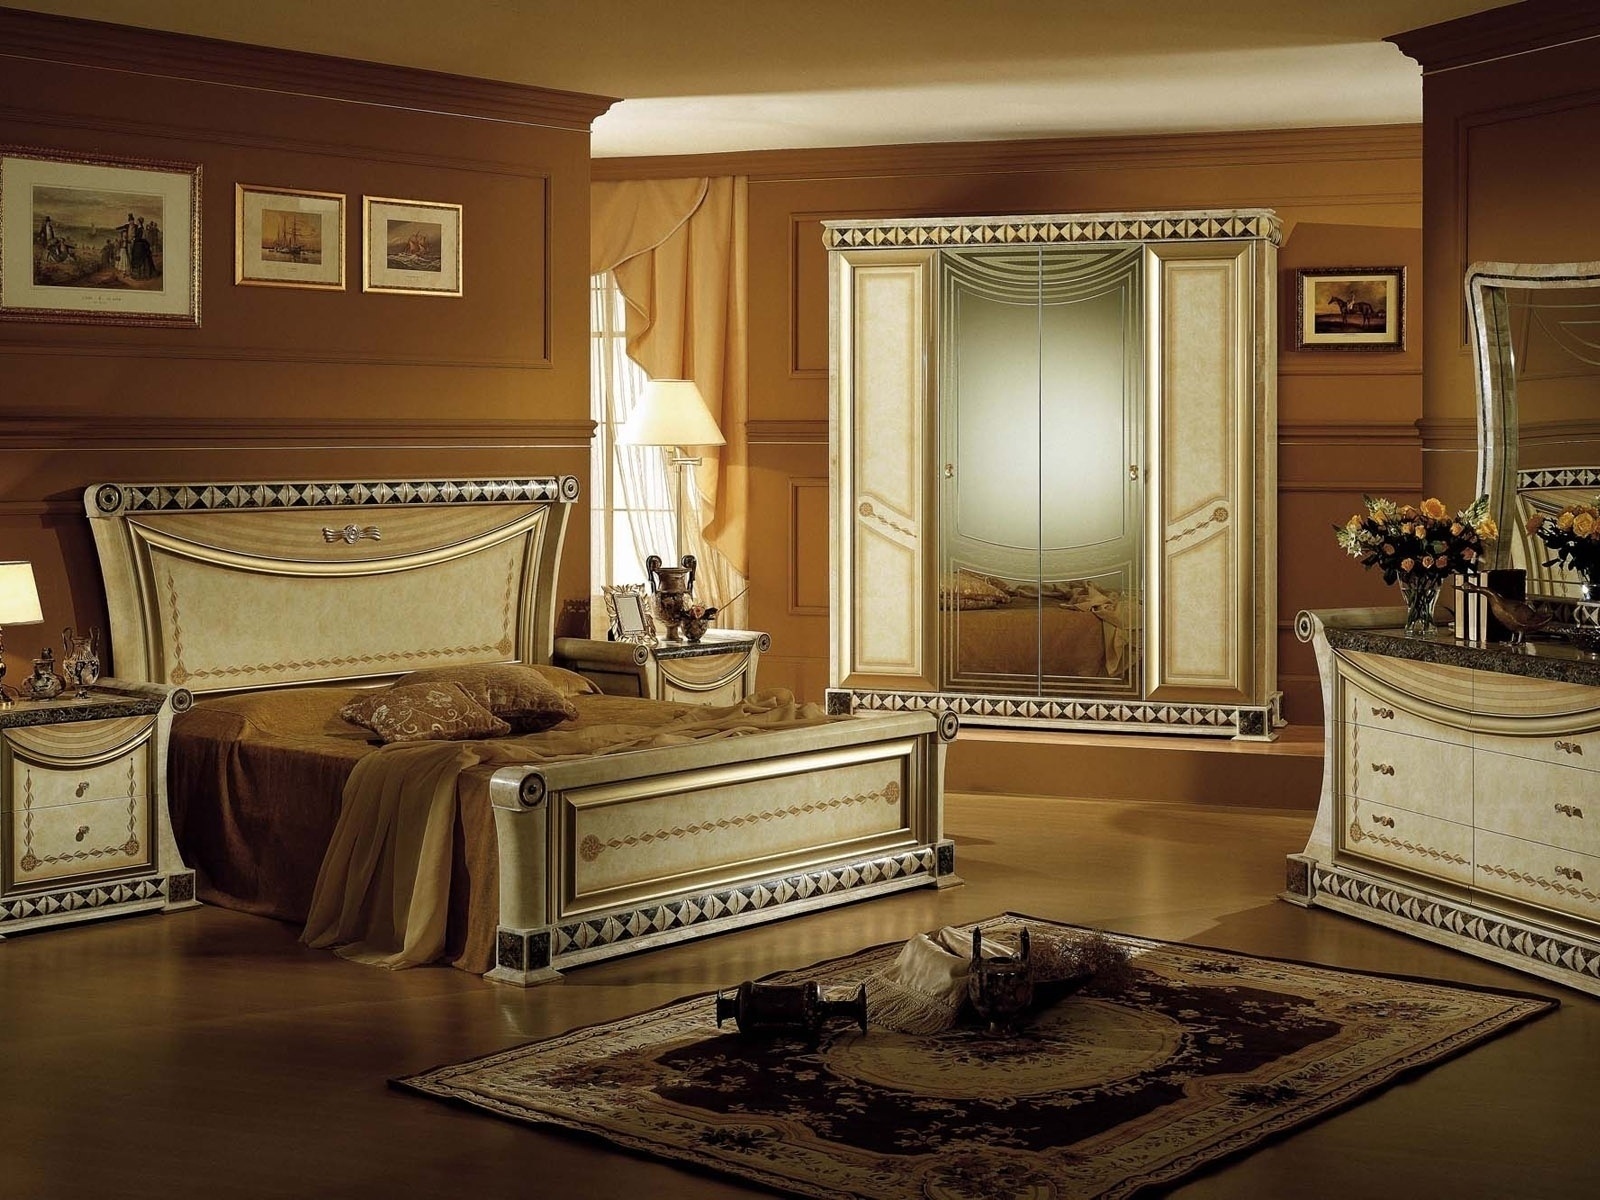 Homes modern bedrooms interior designs. - Home Designity